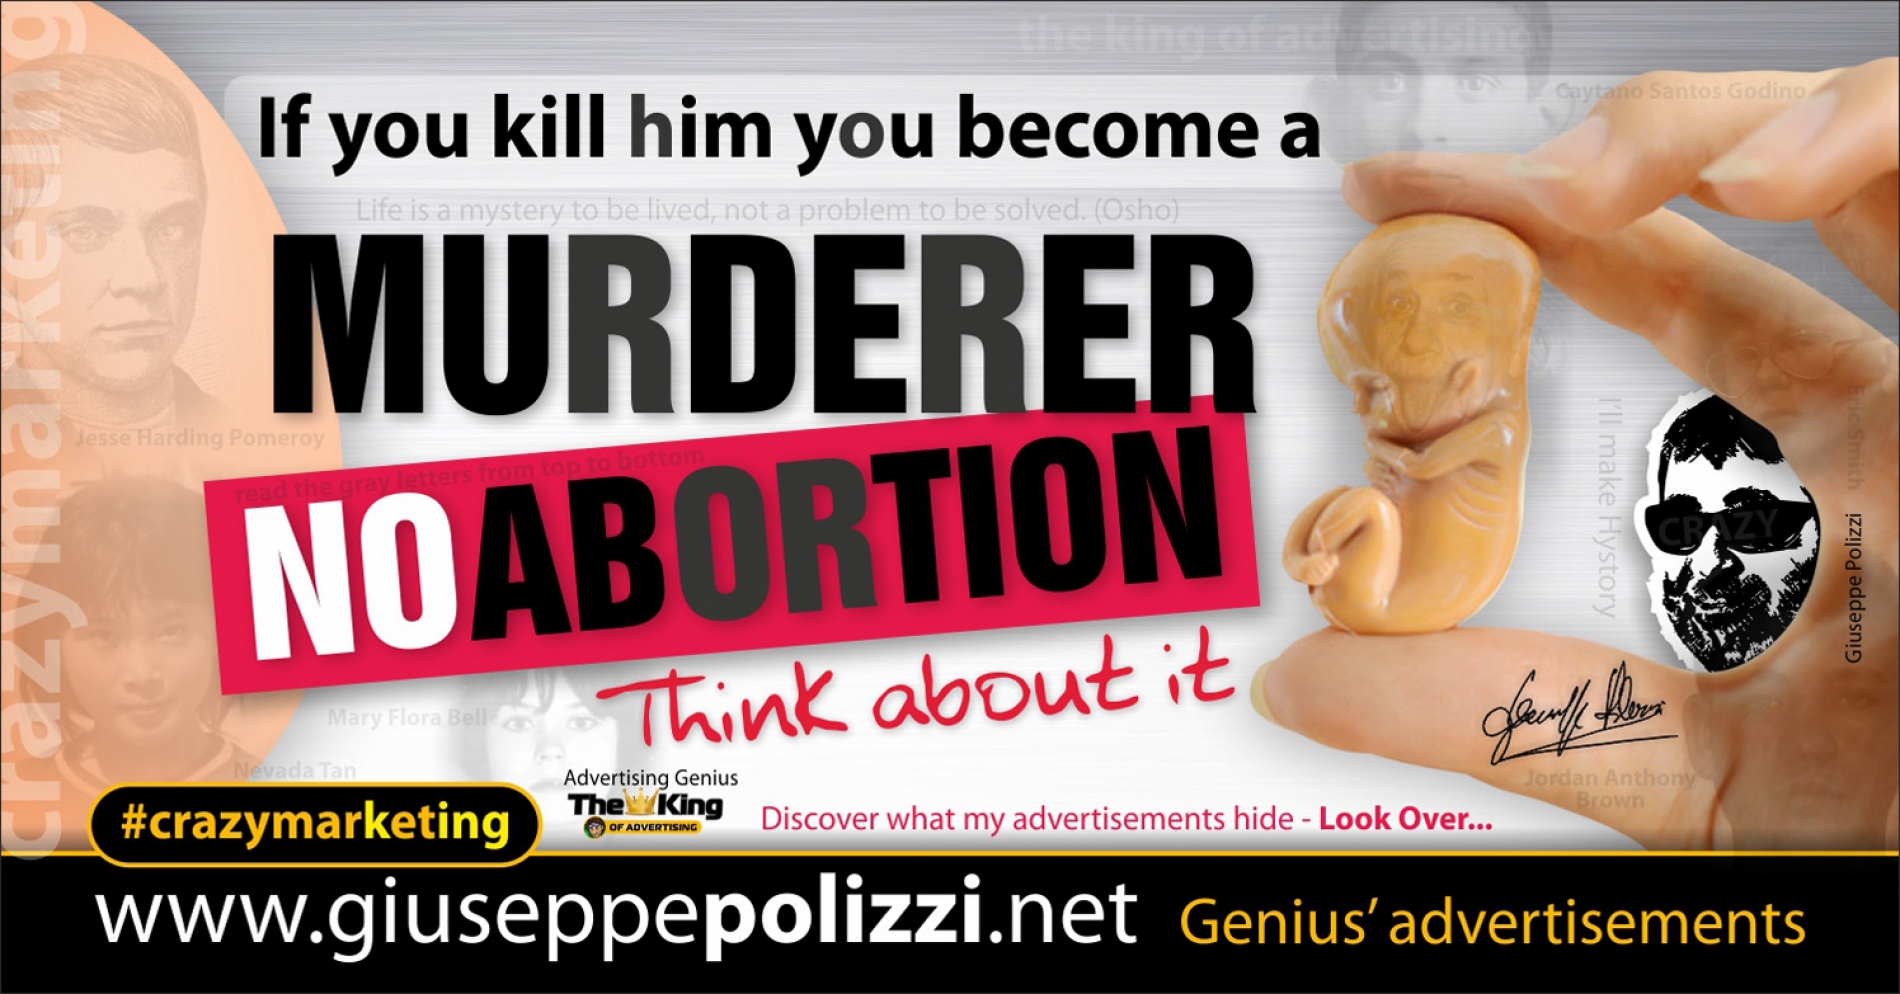 giuseppe polizzi advertisement ABORTION crazy marketing genius  2017